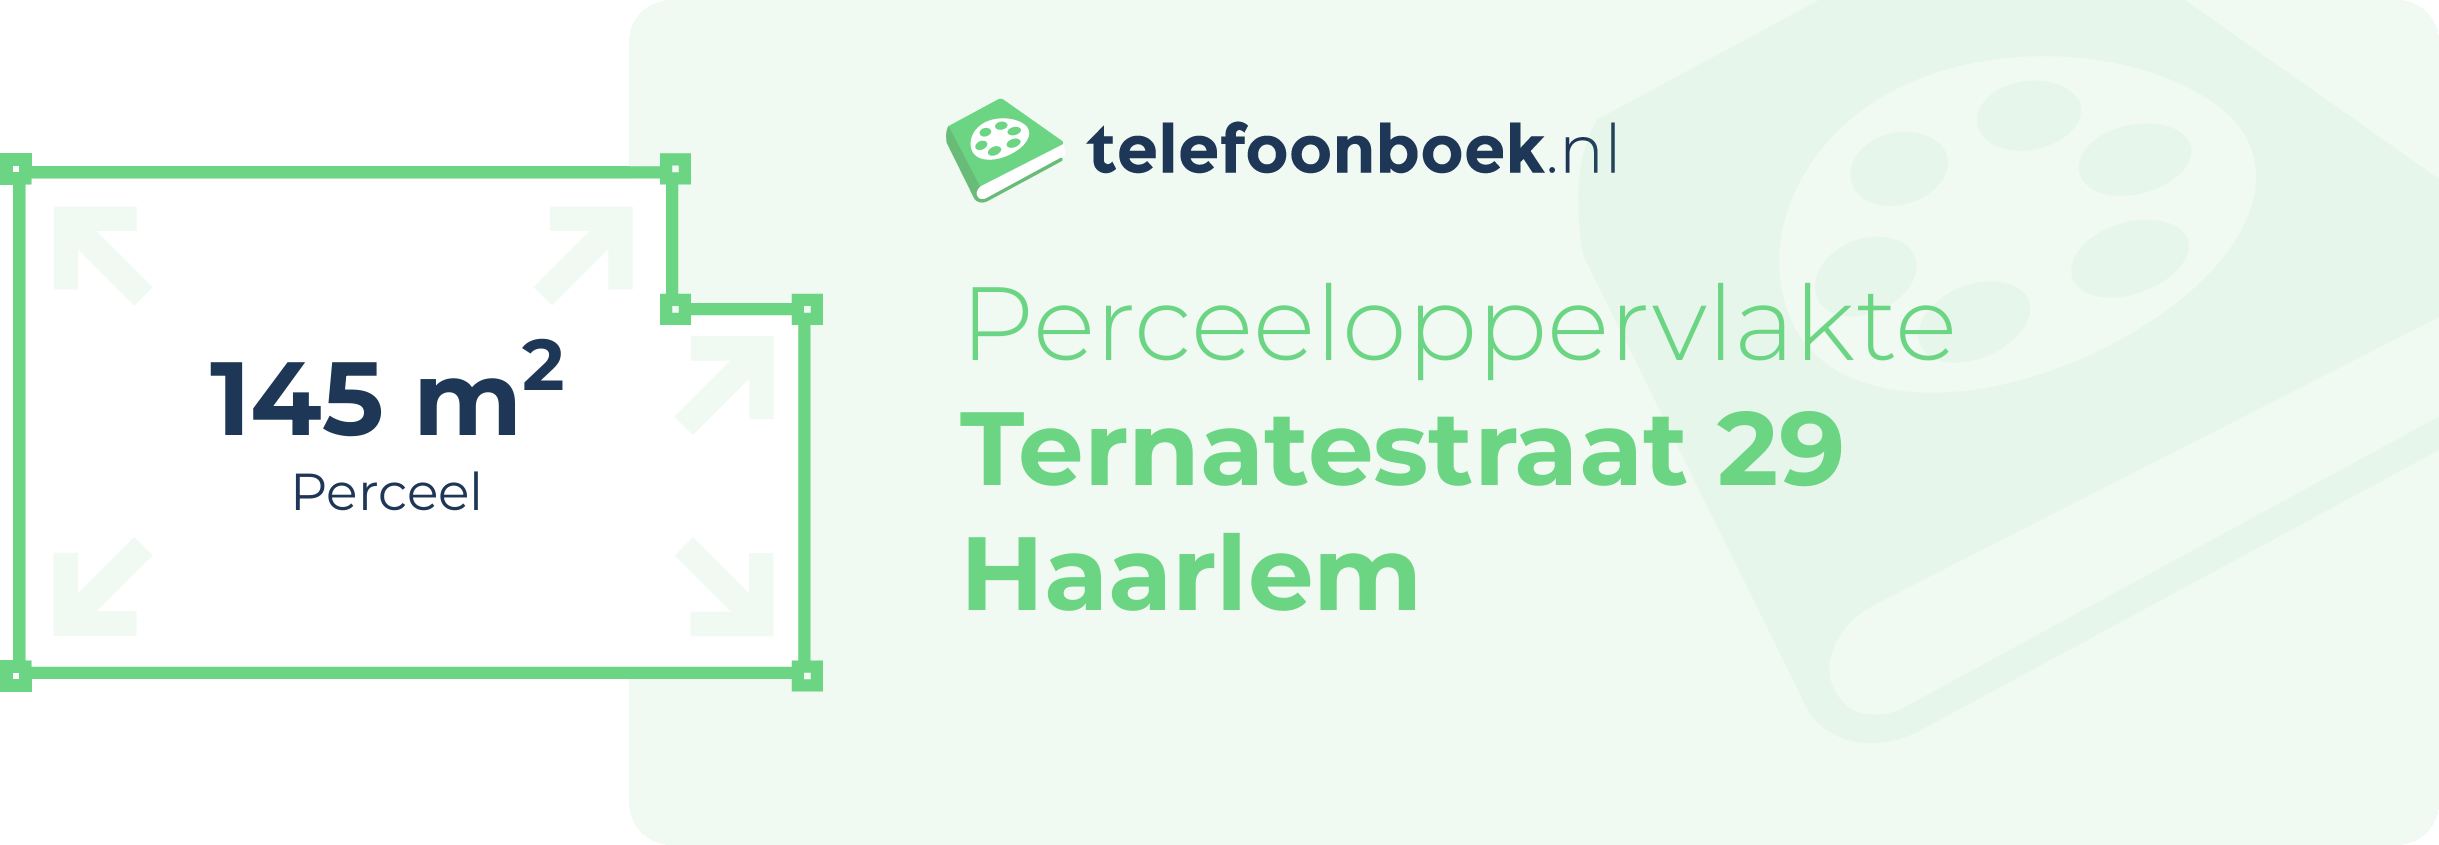 Perceeloppervlakte Ternatestraat 29 Haarlem